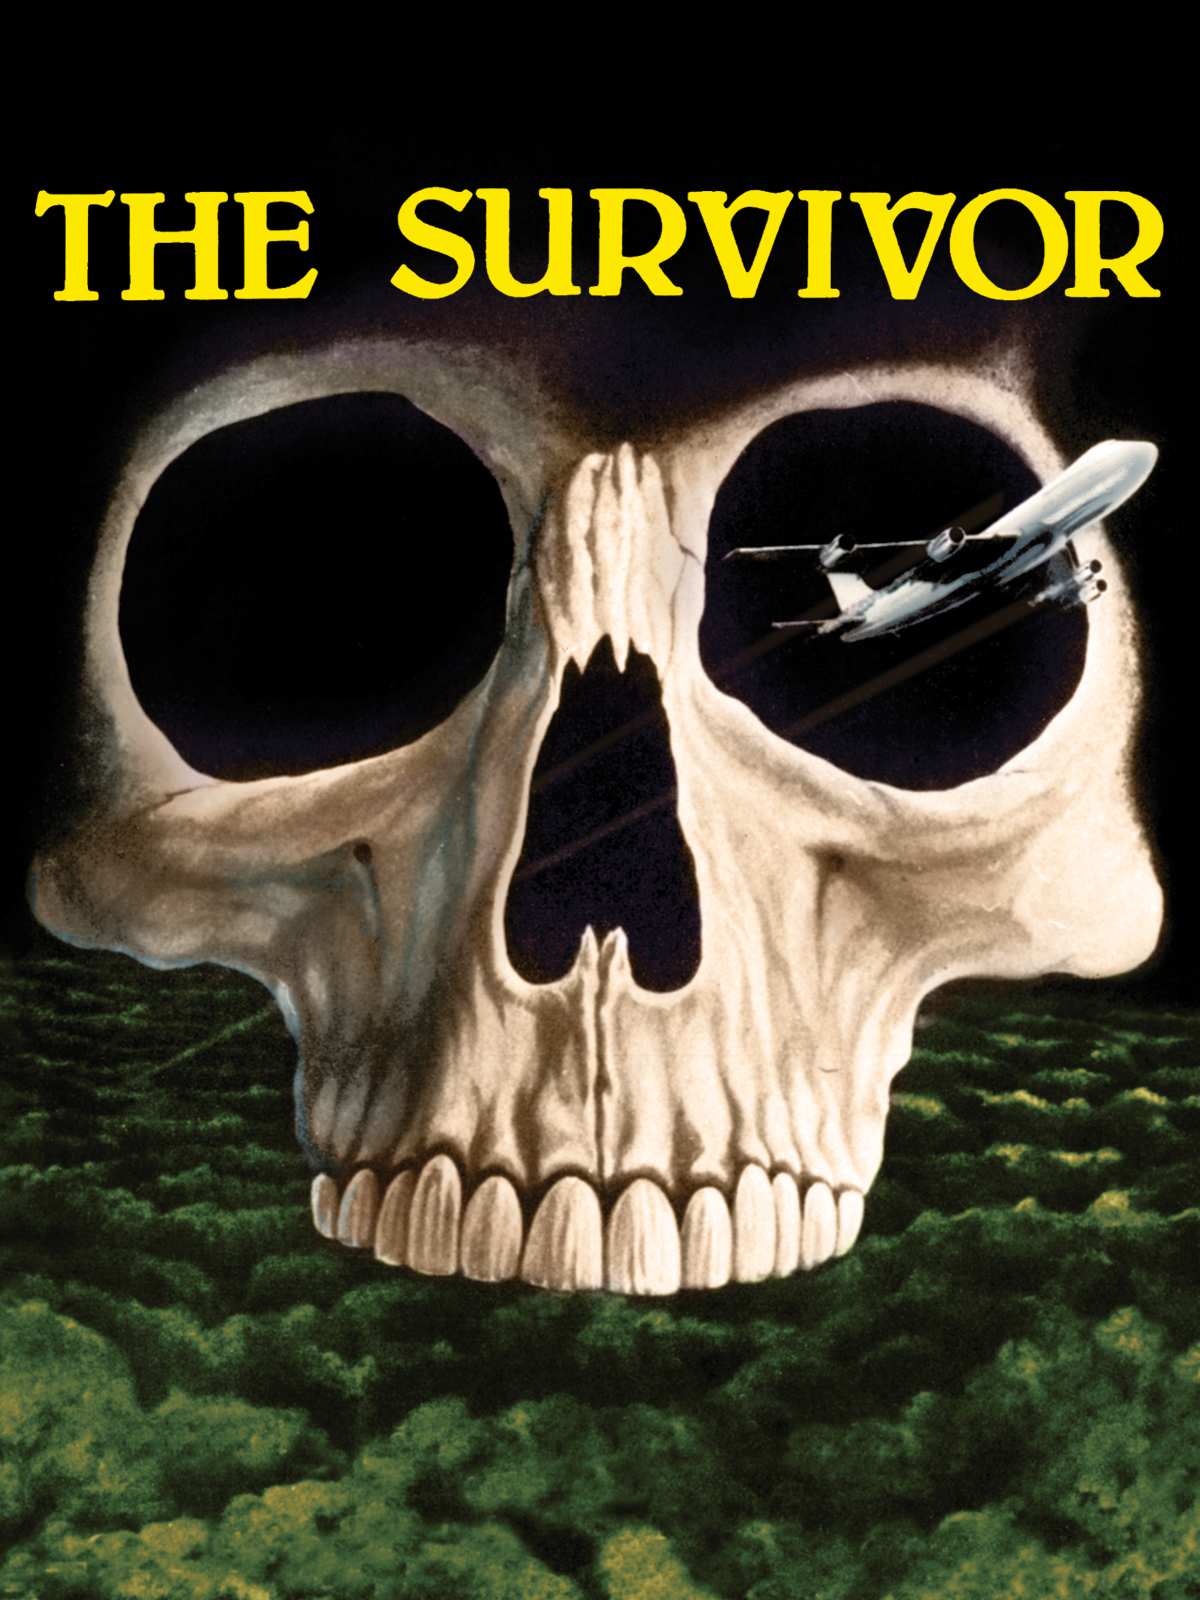 The Survivor (1981) Screenshot 1 